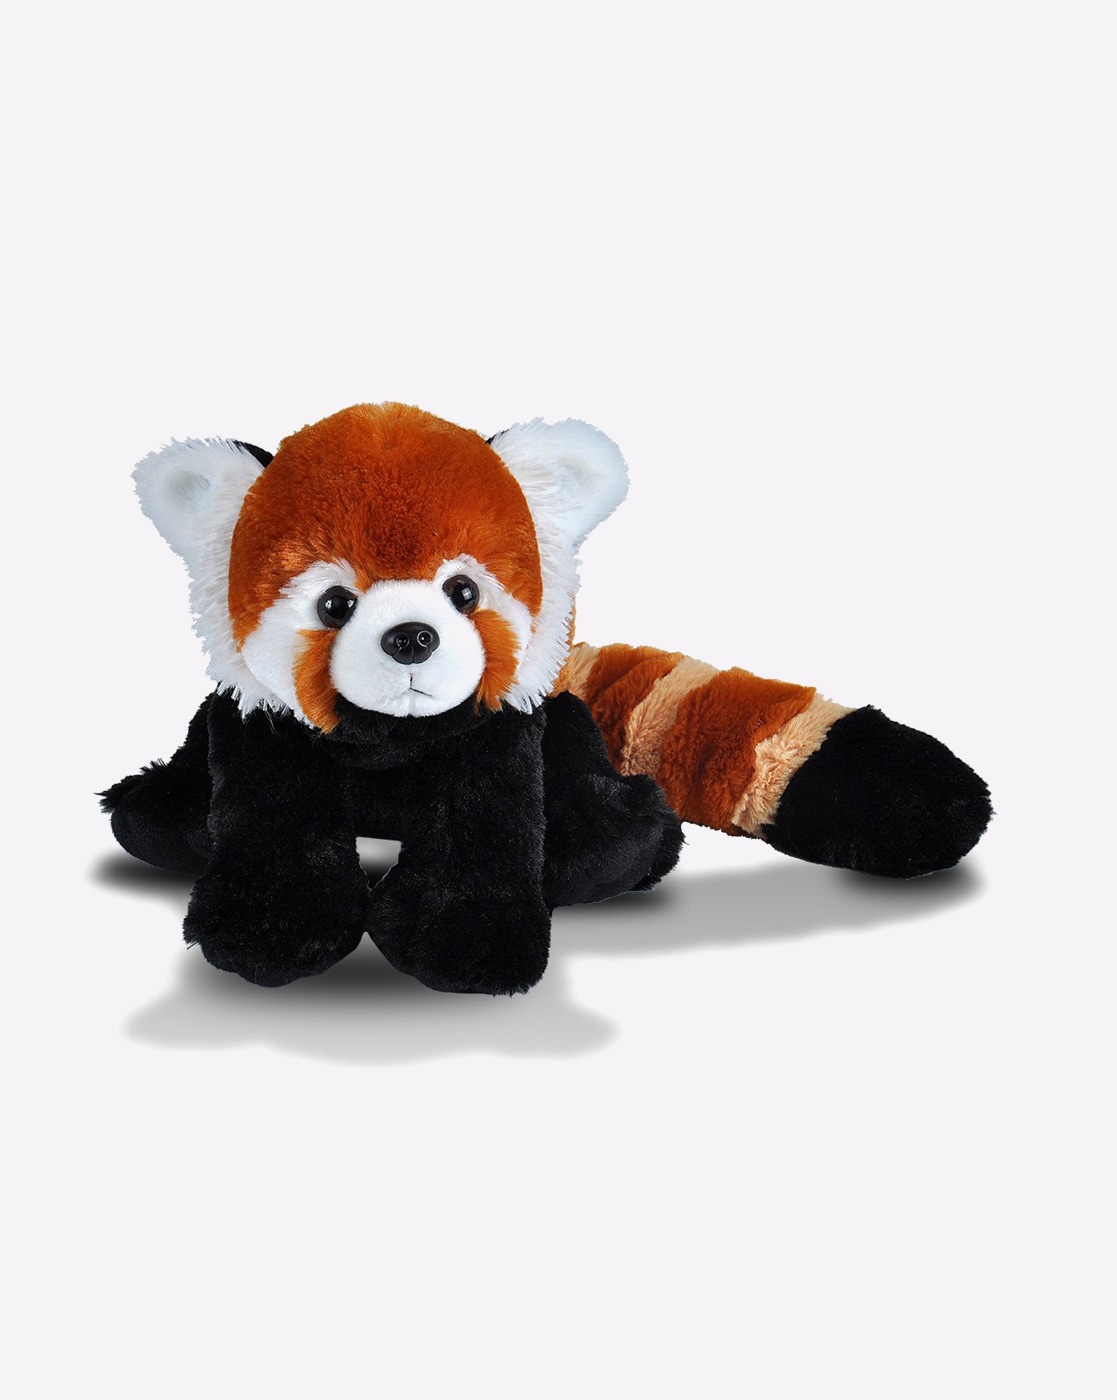 buy panda soft toy